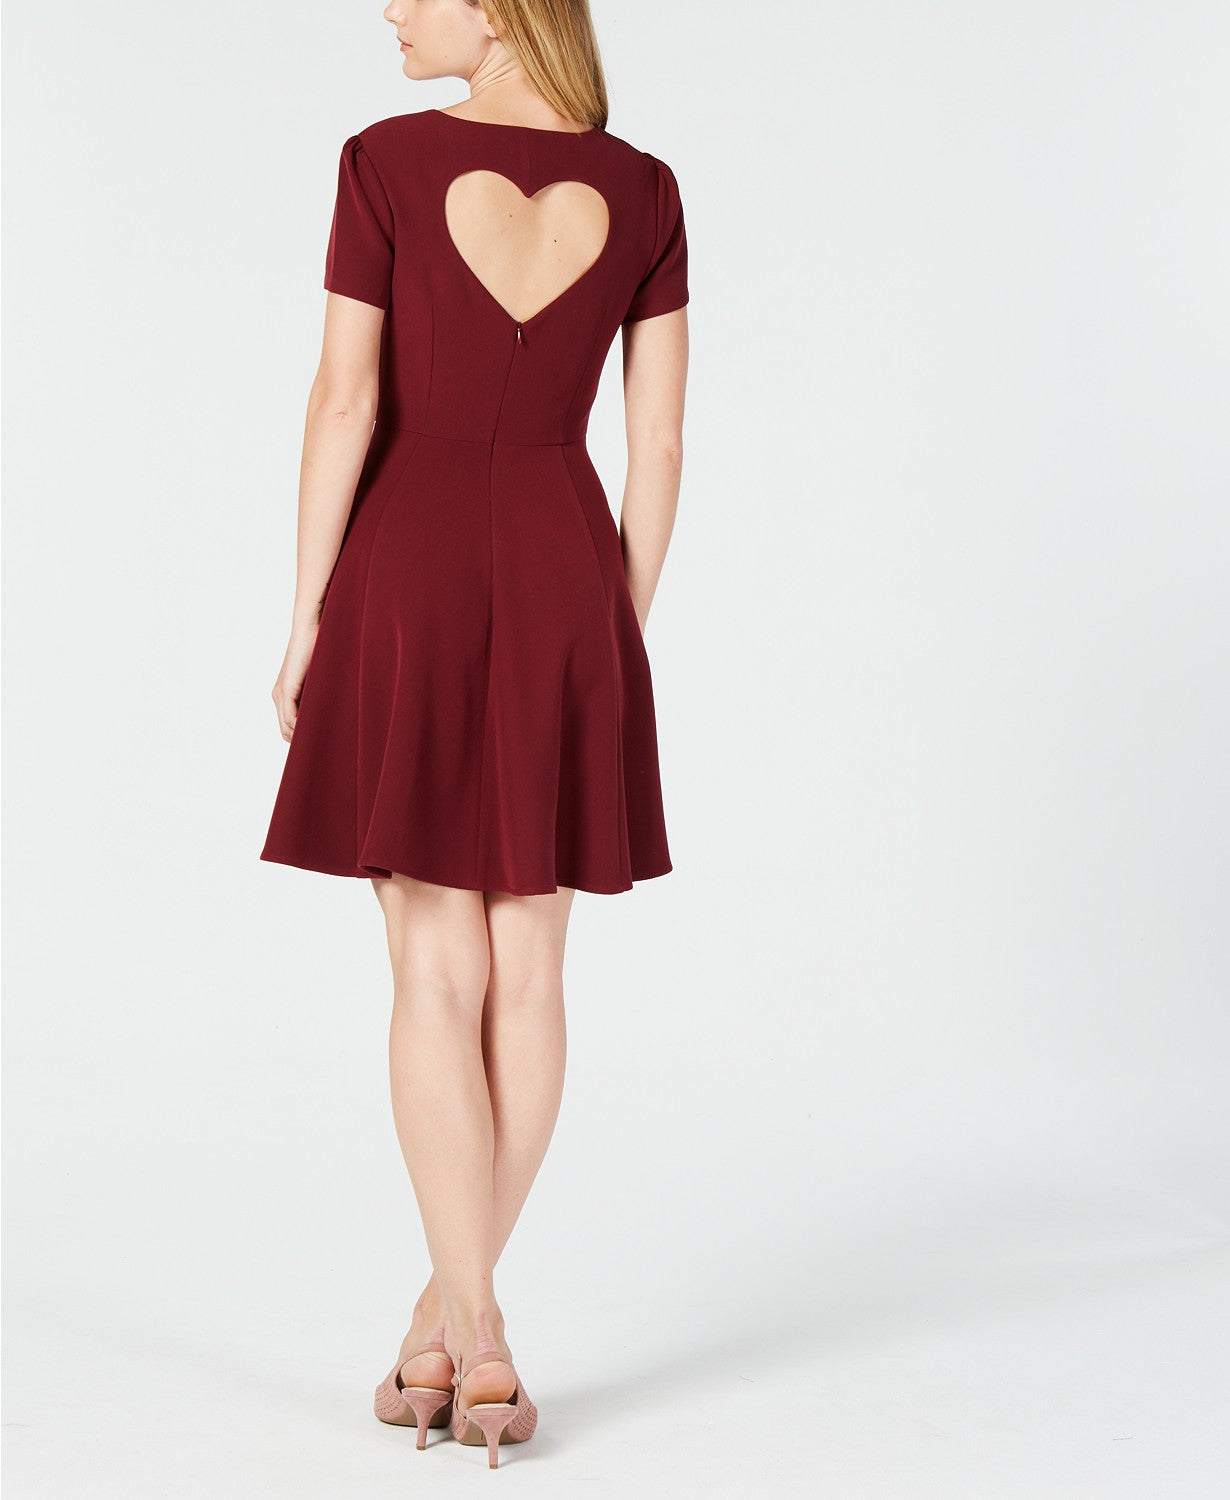 MAISON JULES Dress Heart Cutout Fit Flare Wine 4